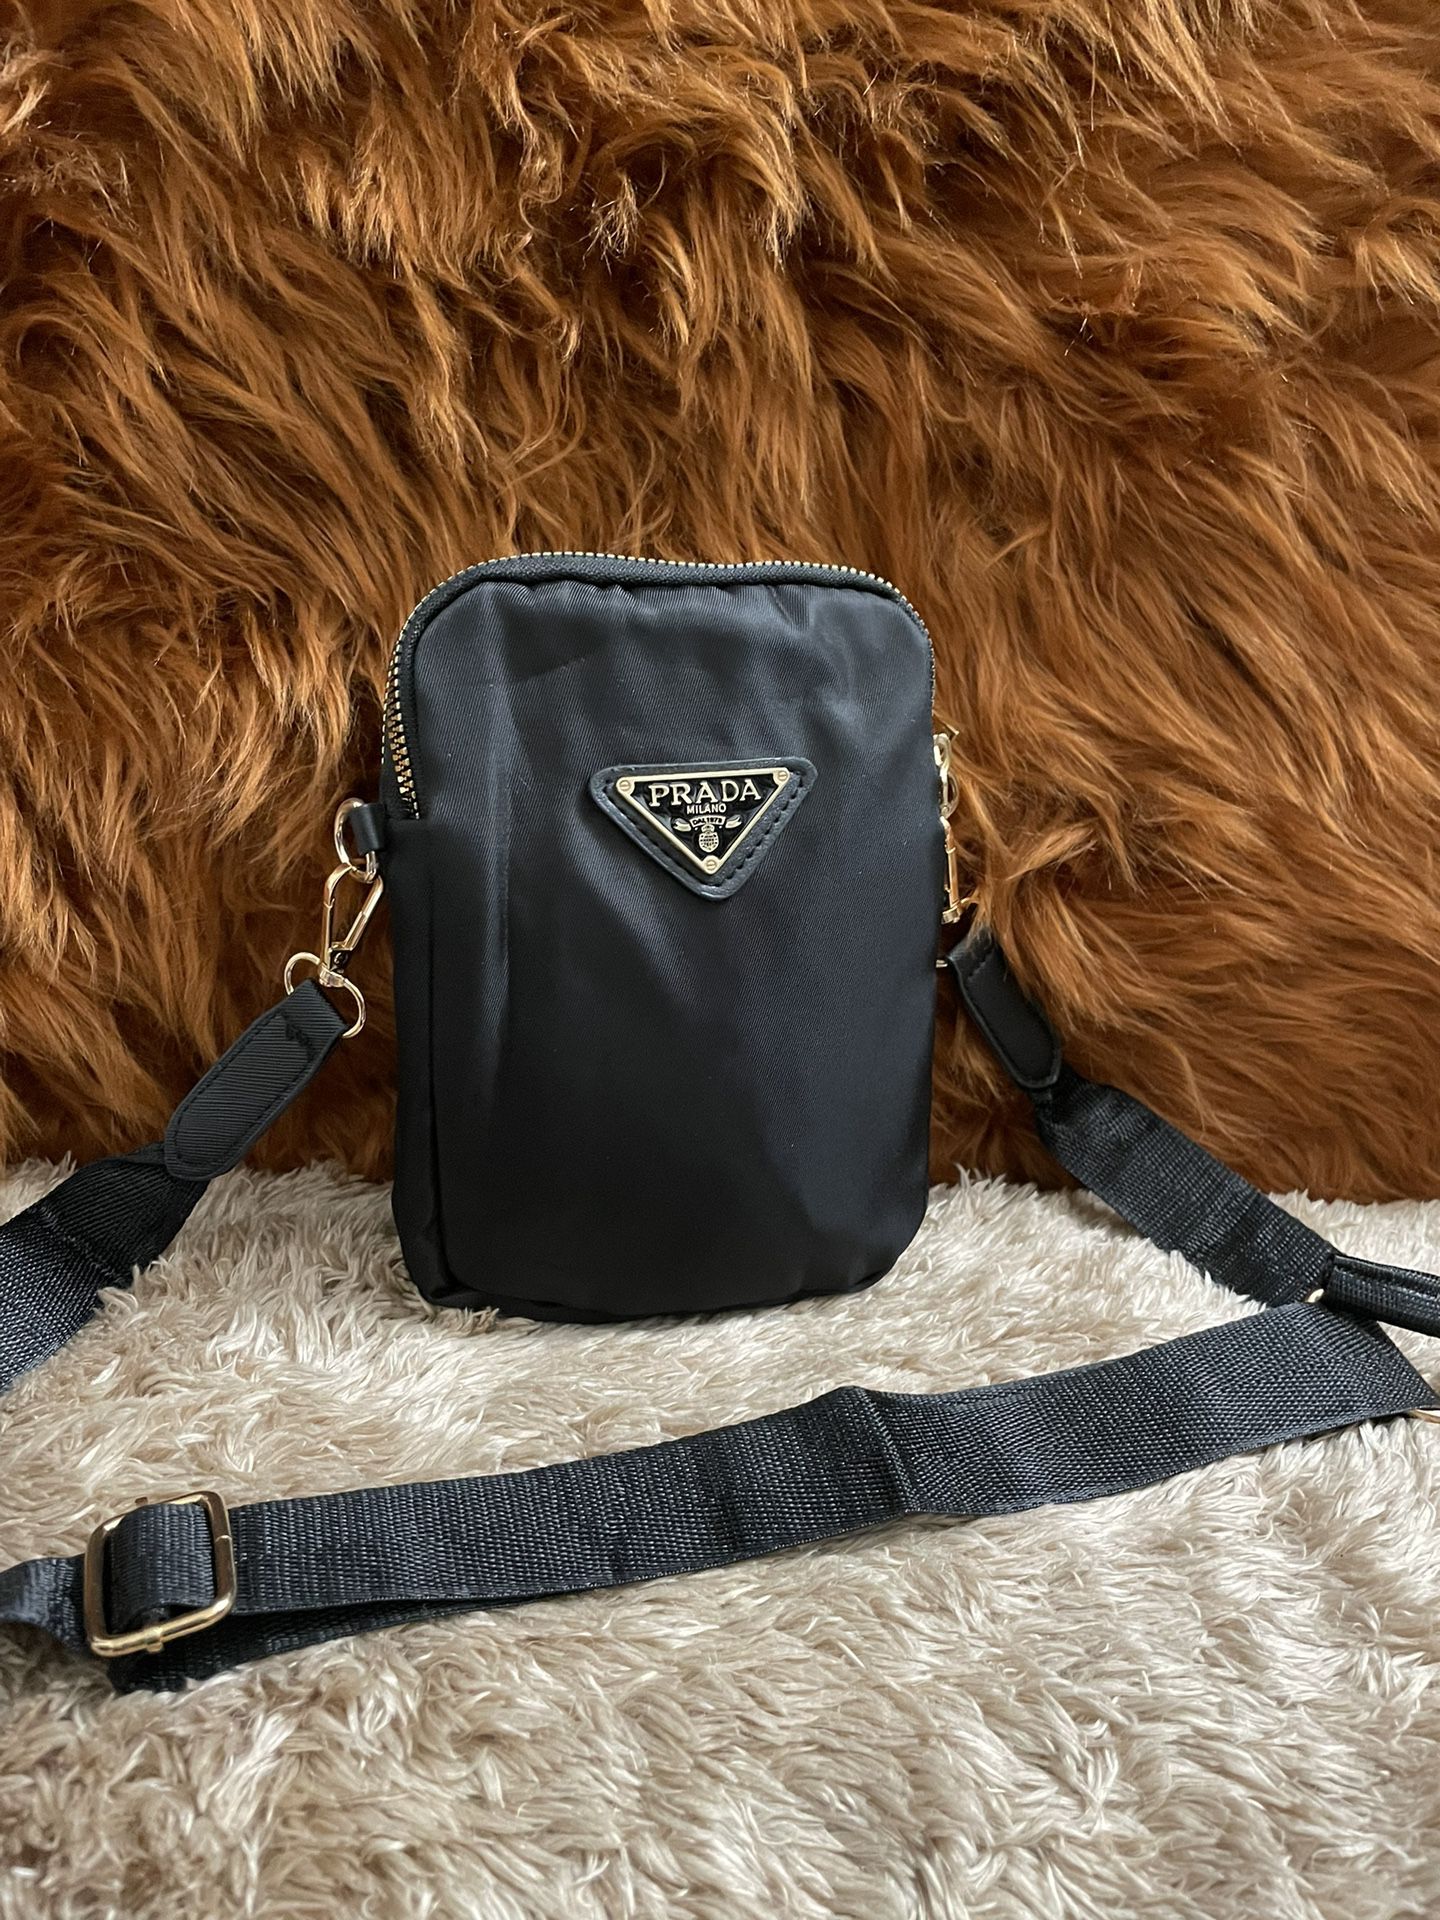 New Cross Body Bag for Sale in Las Vegas, NV - OfferUp